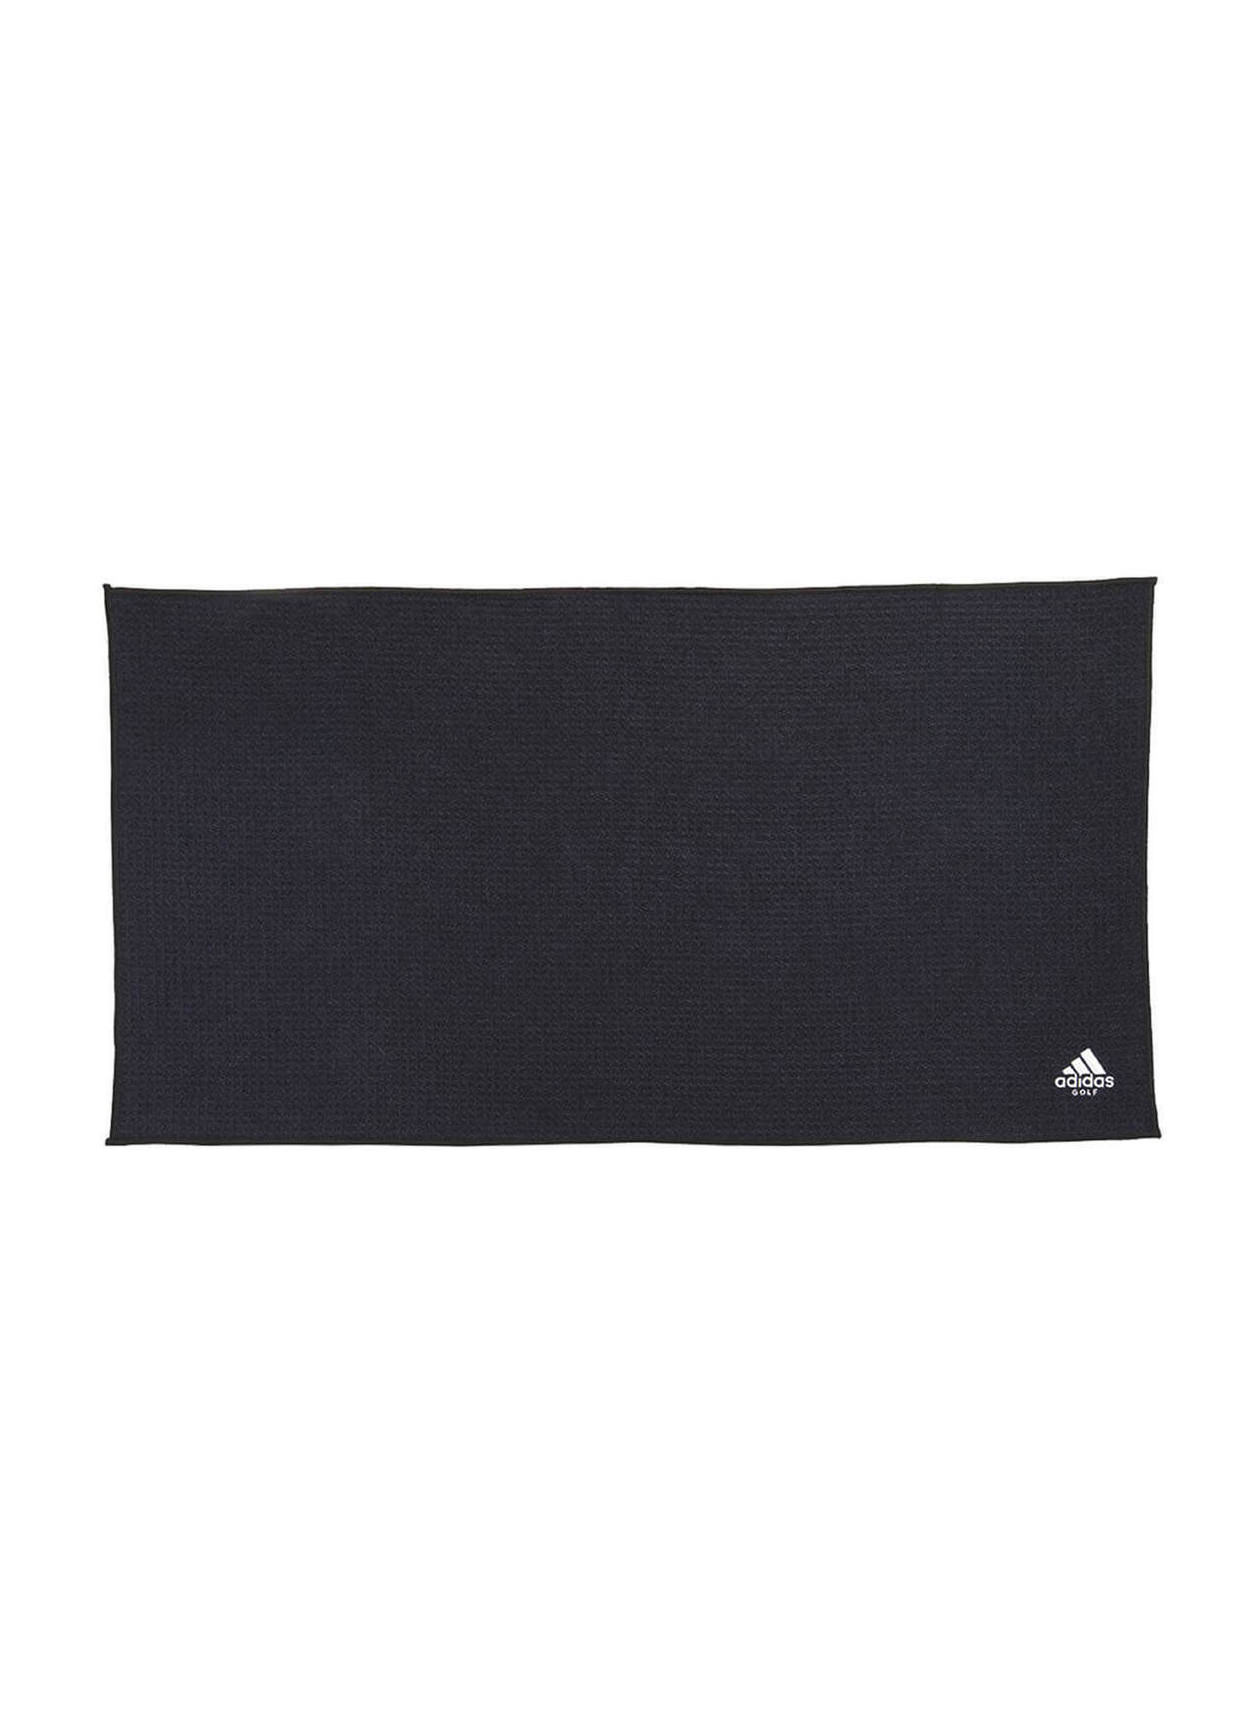 Adidas Black Golf Microfiber Players Towel